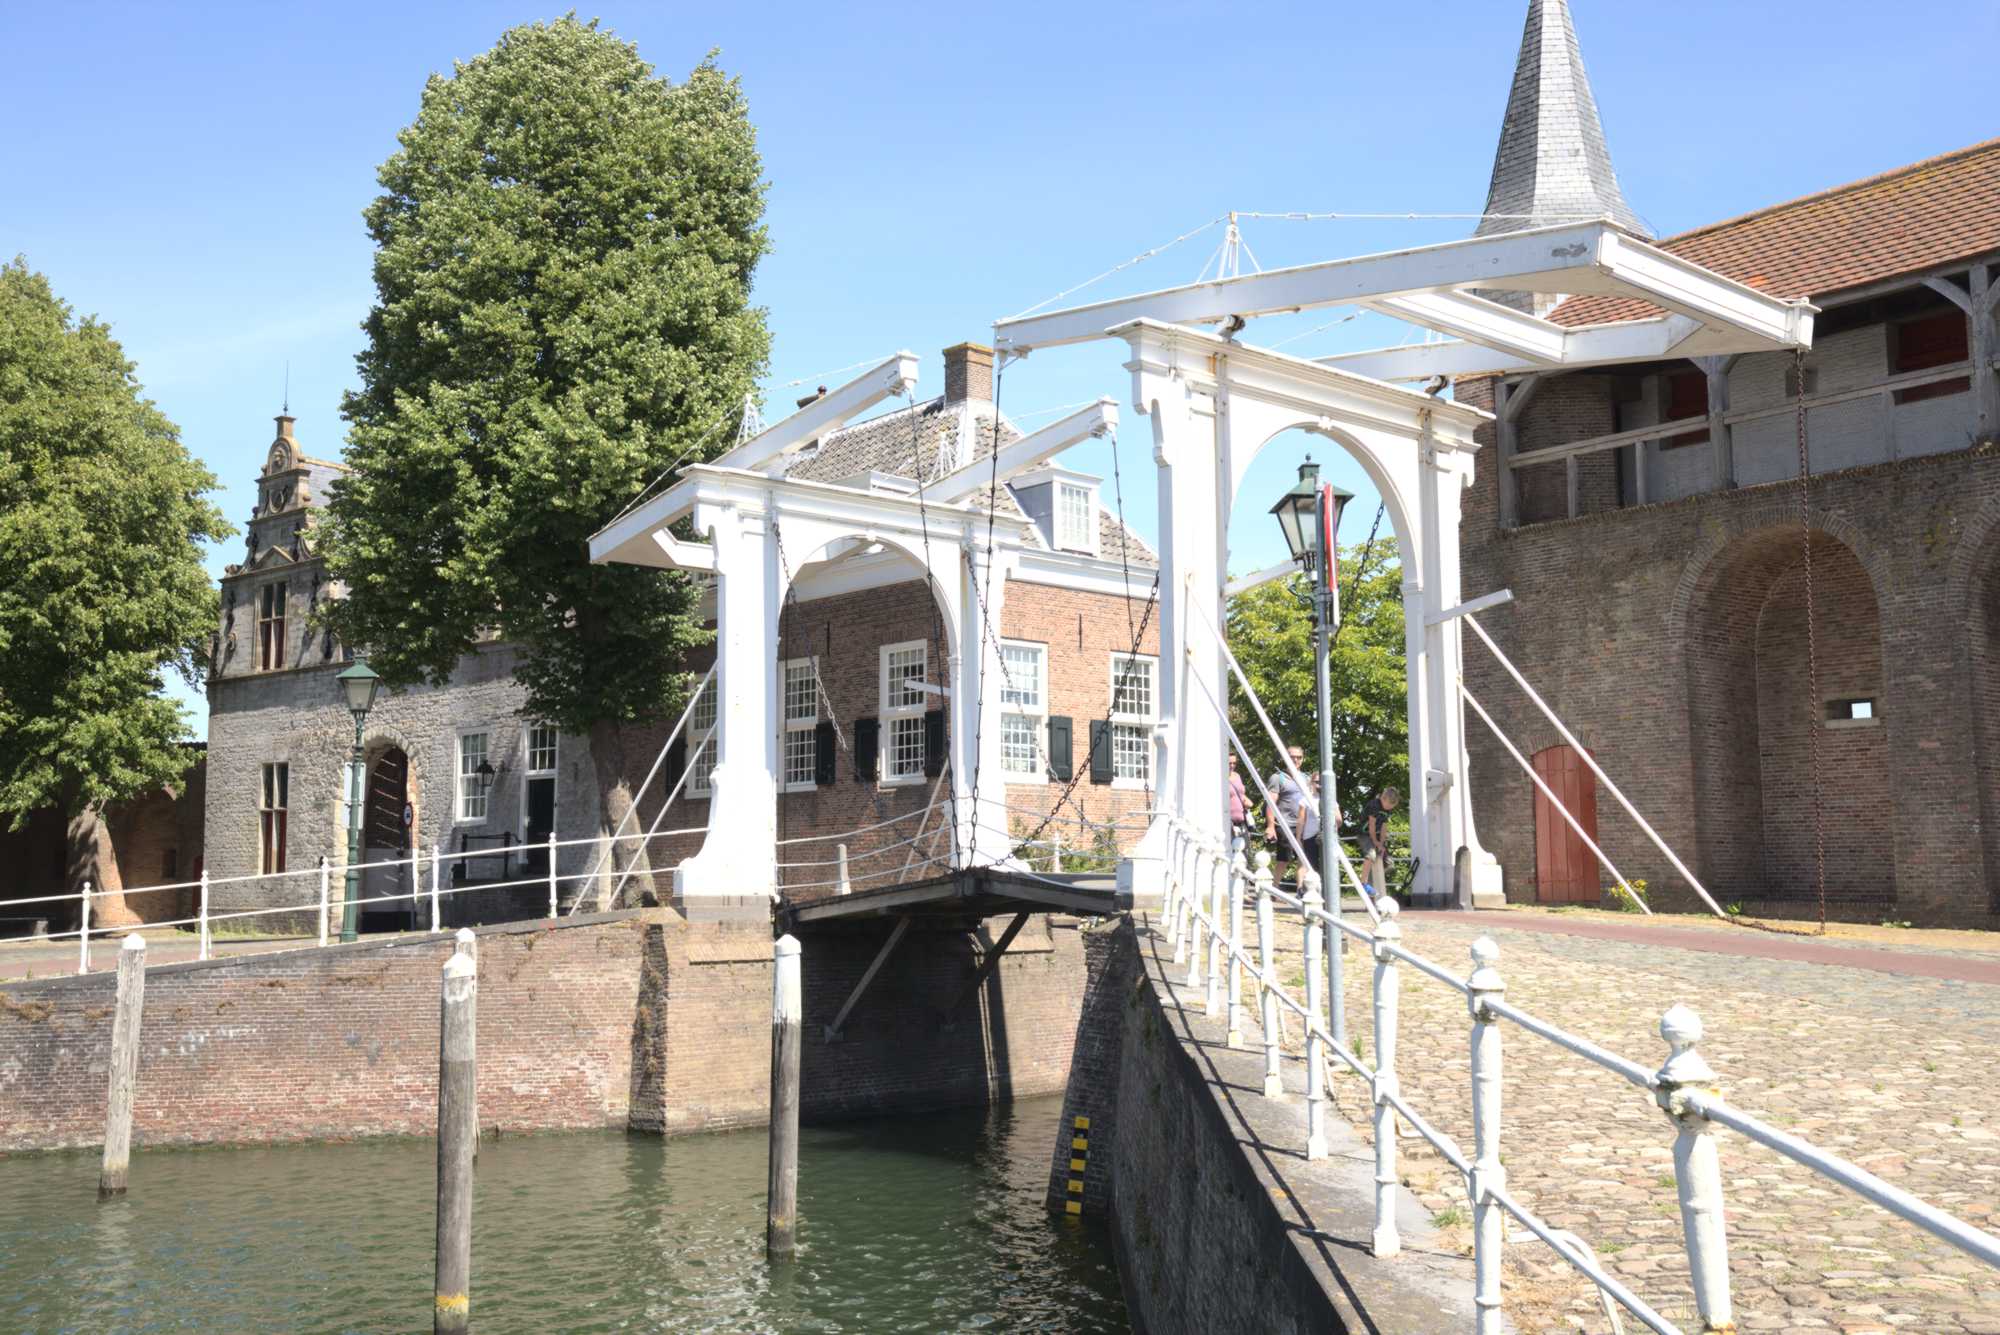 Lokation: Niederlande | Zeeland | Schouwen-Duiveland | Zierikzee Kategorien: Brücke, Datum: 03.07.2020